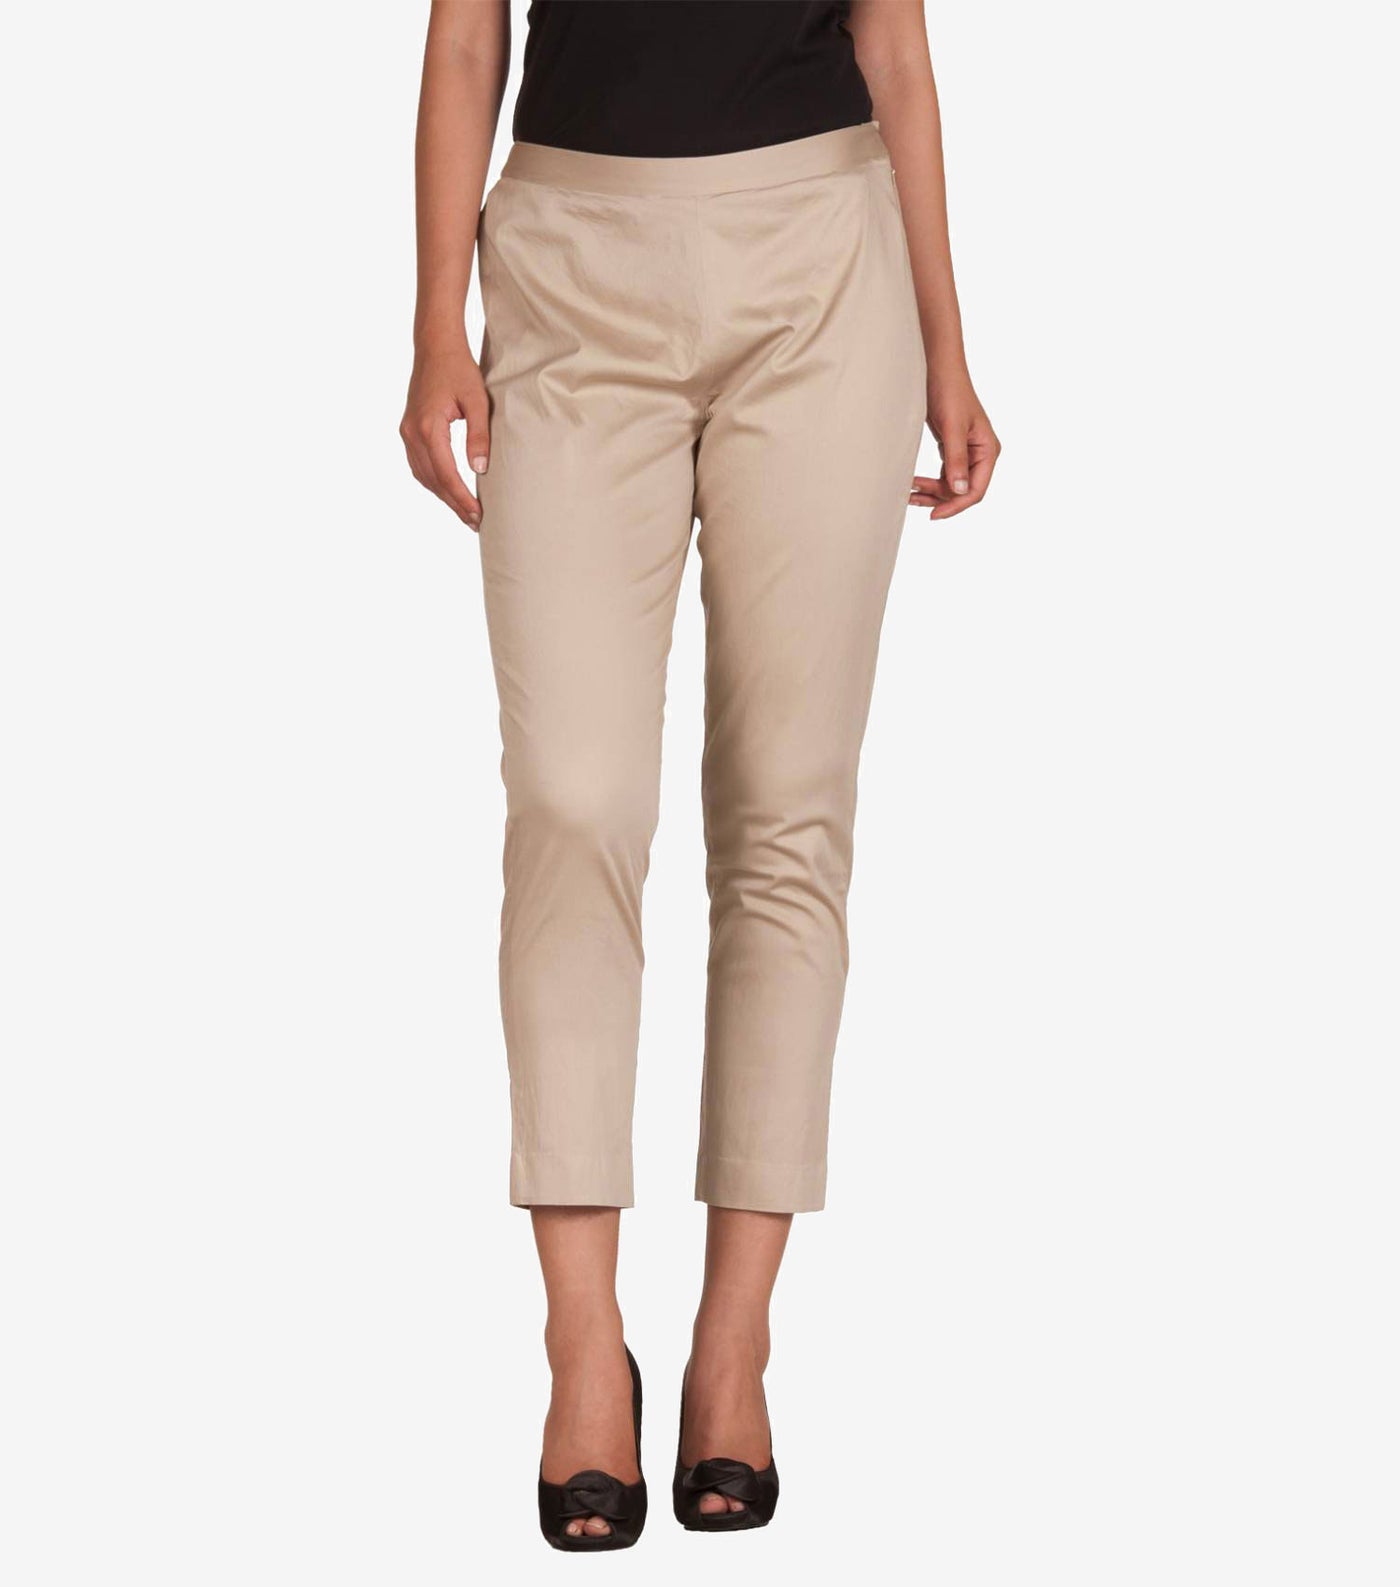 Premium Cotton Lycra Pants Combo for Women (Size M to XL)